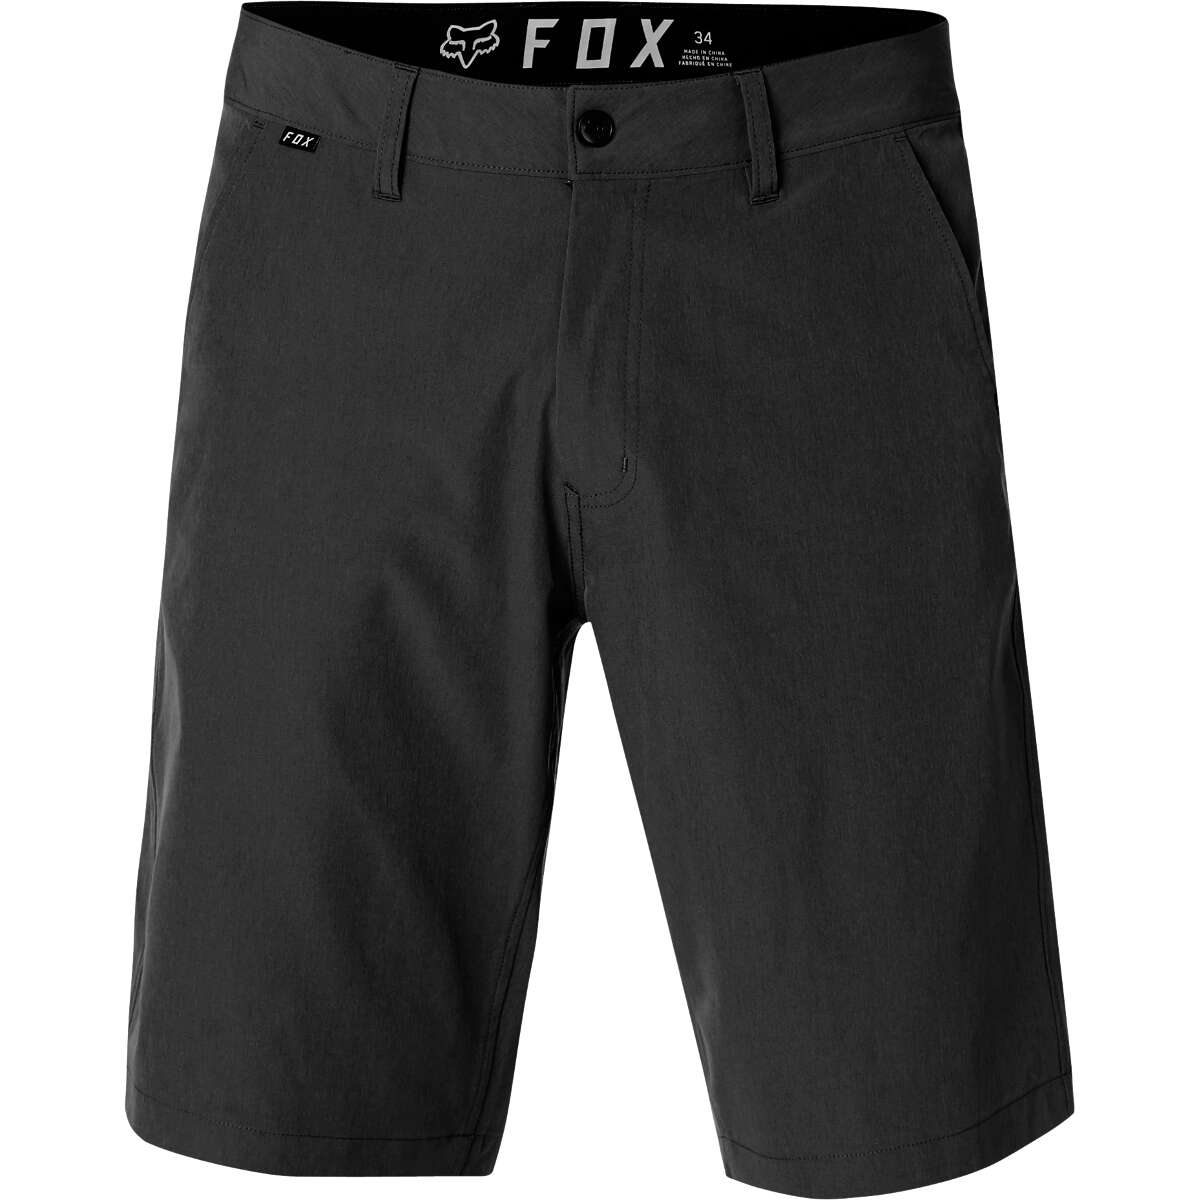 Fox Shorts Essex Tech Stretch Noir